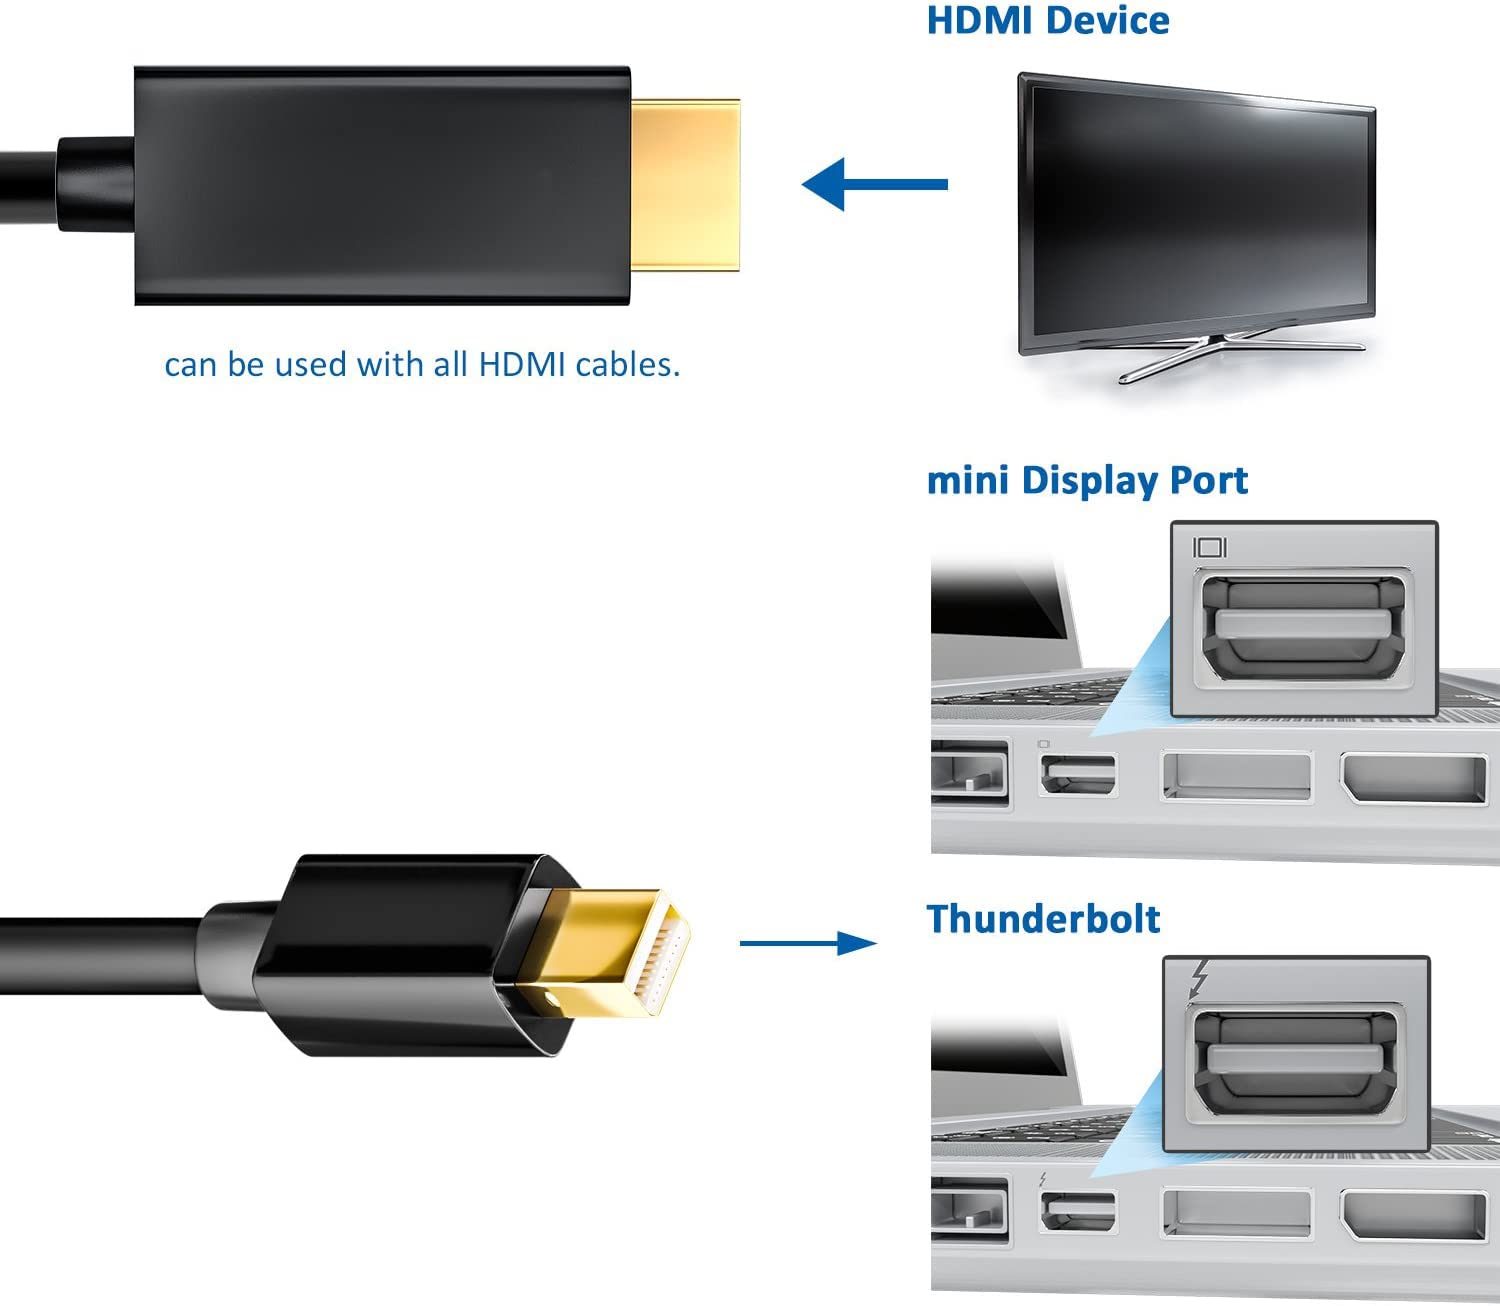 mDP2HD430-18-I | Кабель Mini DisplayPort - HDMI 1,8м - Видео 4K 30 Гц